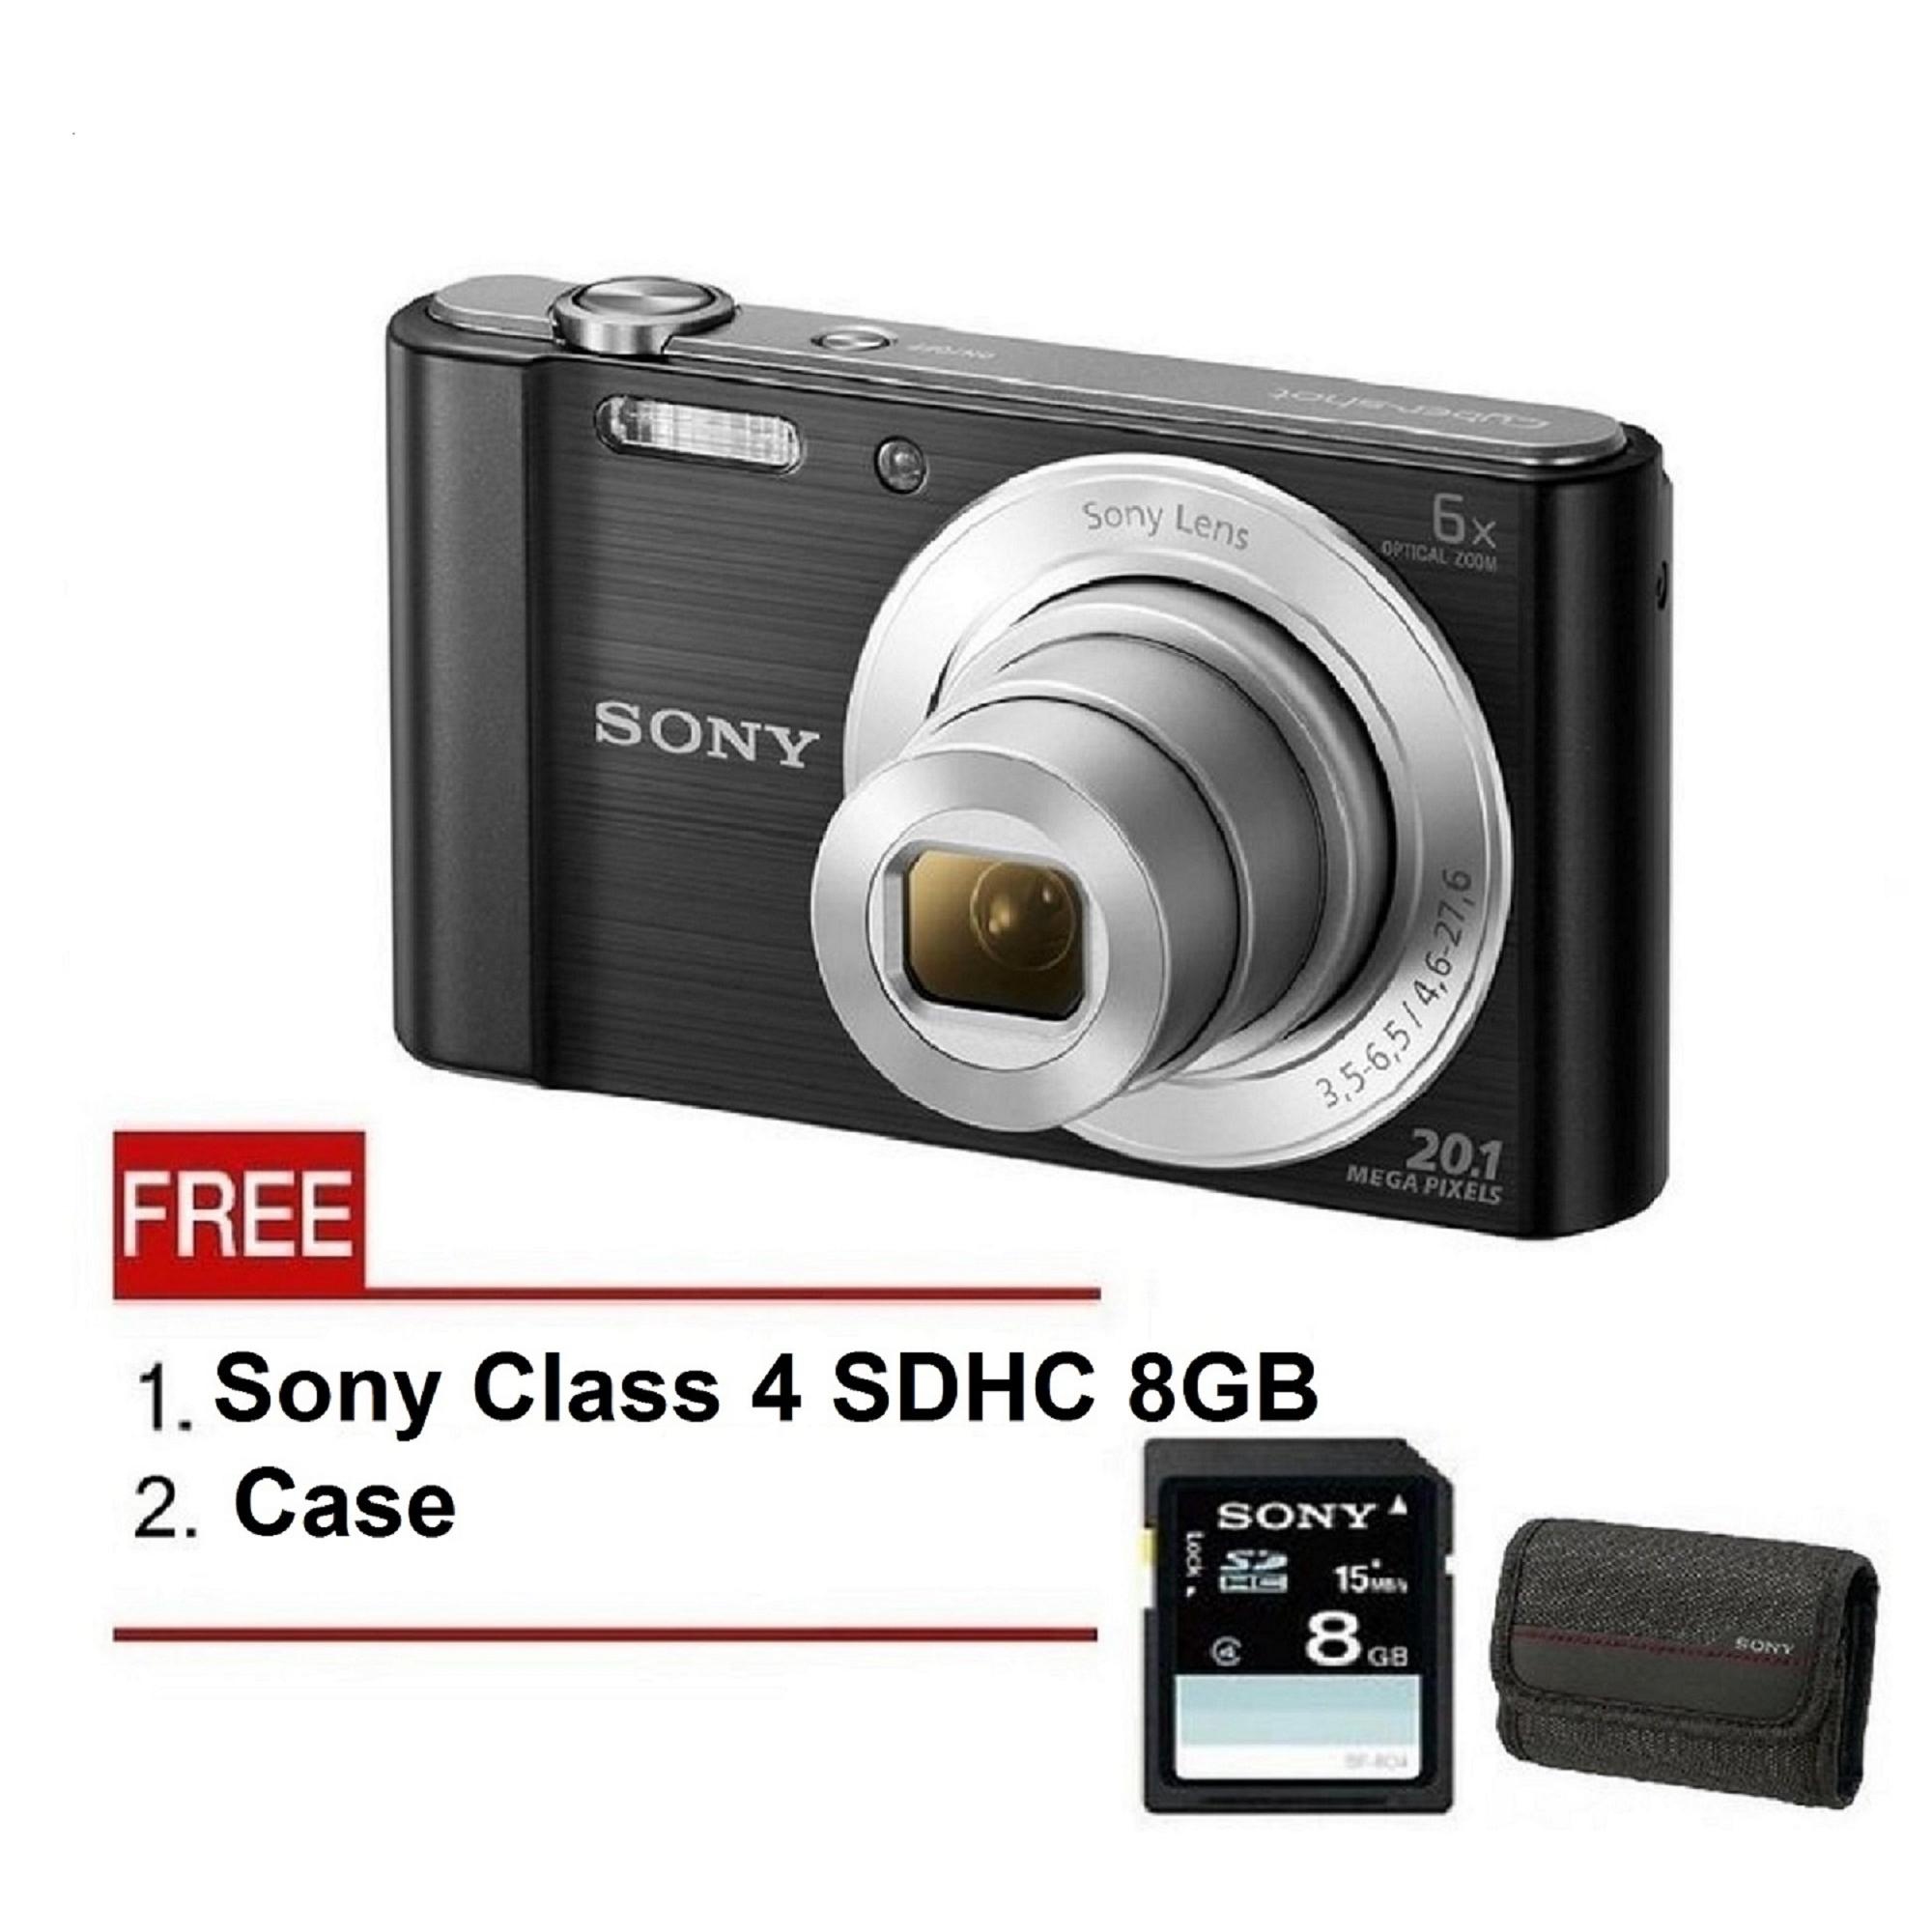 Sony Digital Camera Cyber-Shot Compact Type DSC-W810 Black Colour (Ori